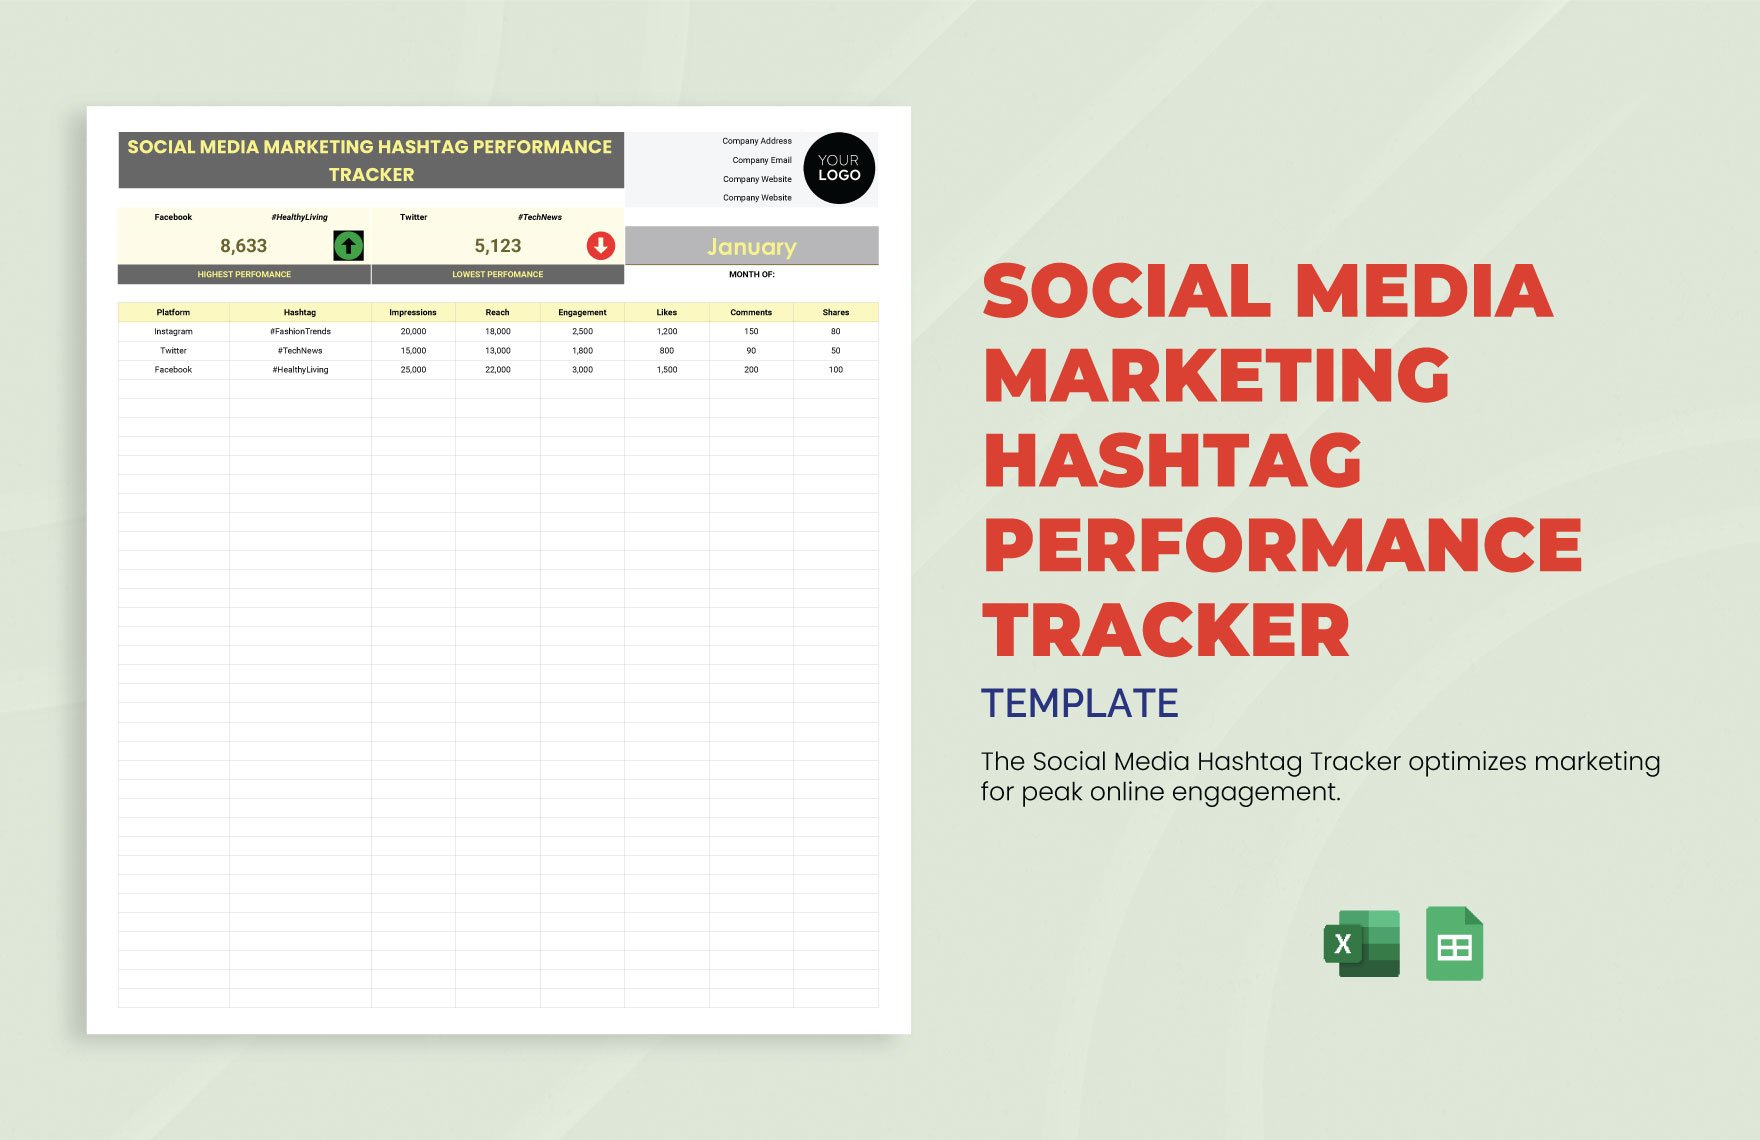 Social Media Marketing Hashtag Performance Tracker Template